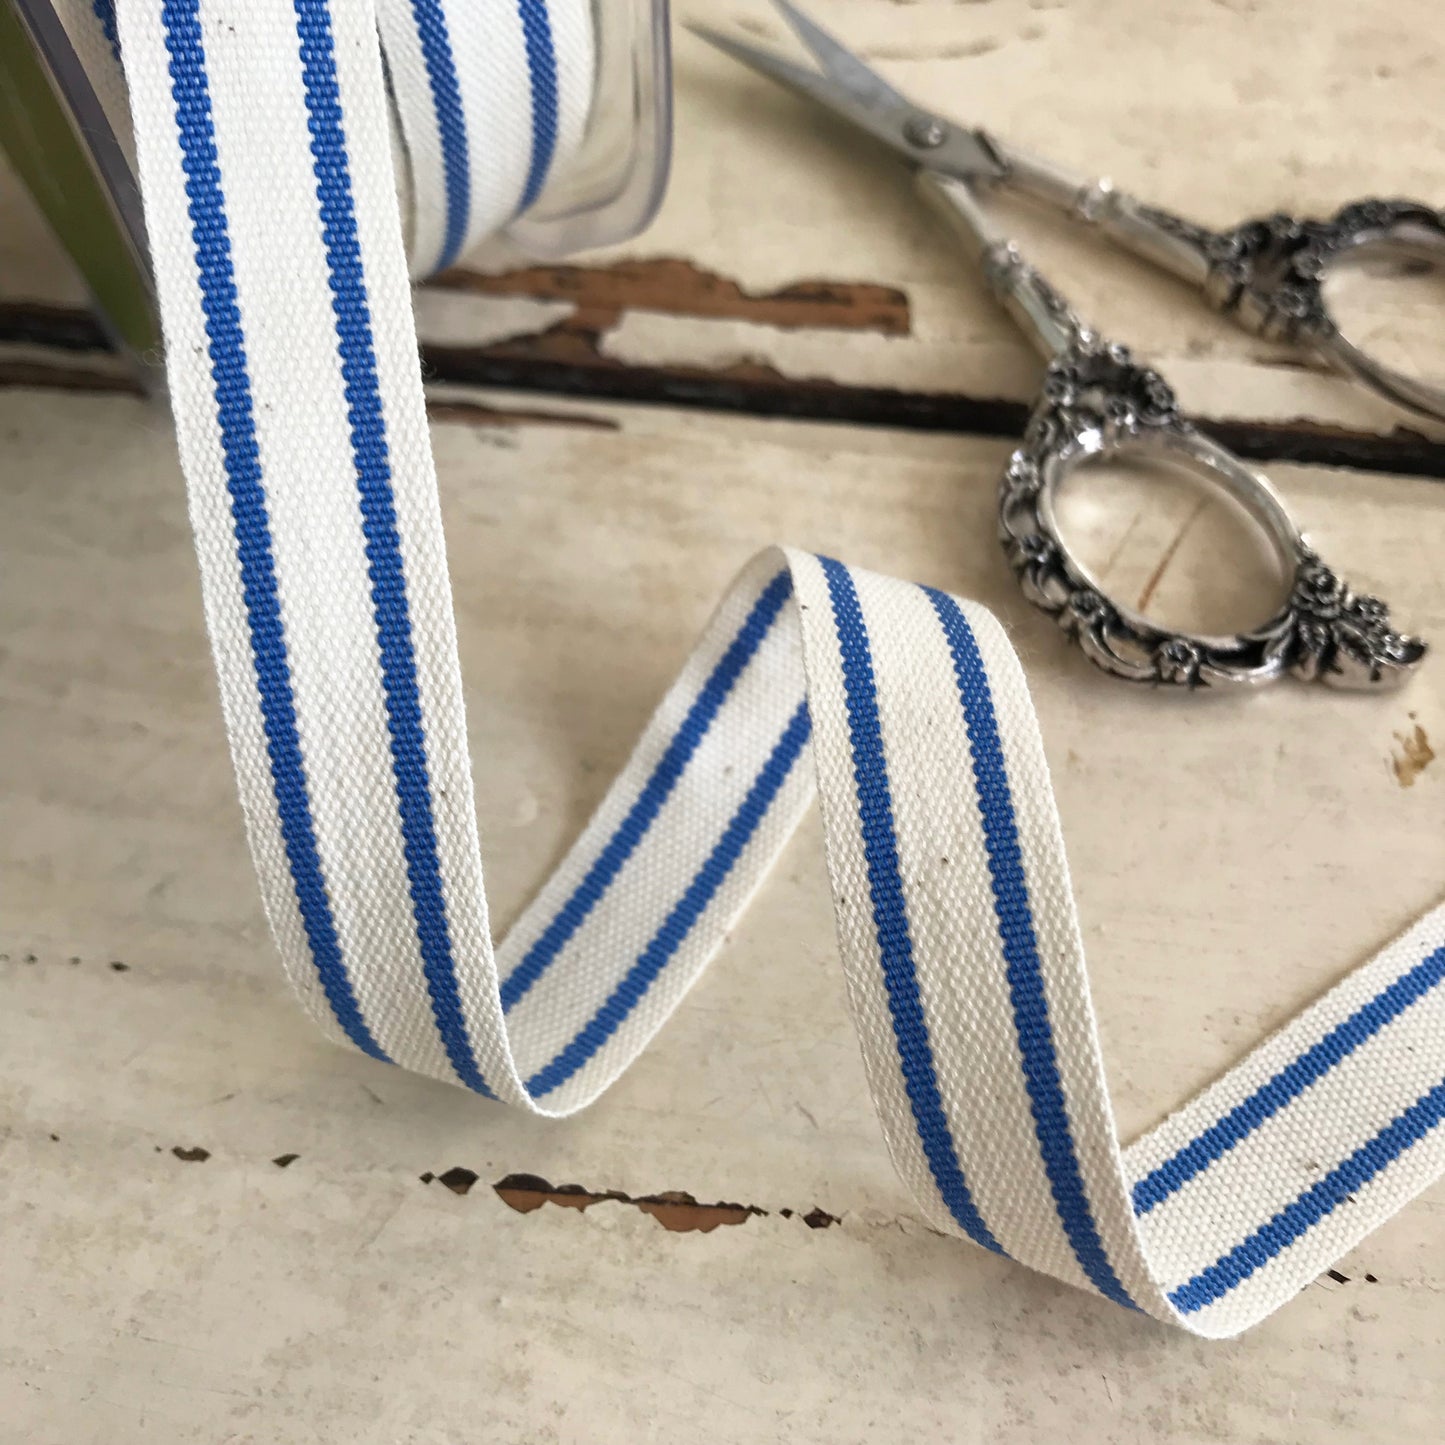 Blue & Cream Ribbon | Stripe Cotton Rustic Ticking 16mm | 1m or Full 20m Roll